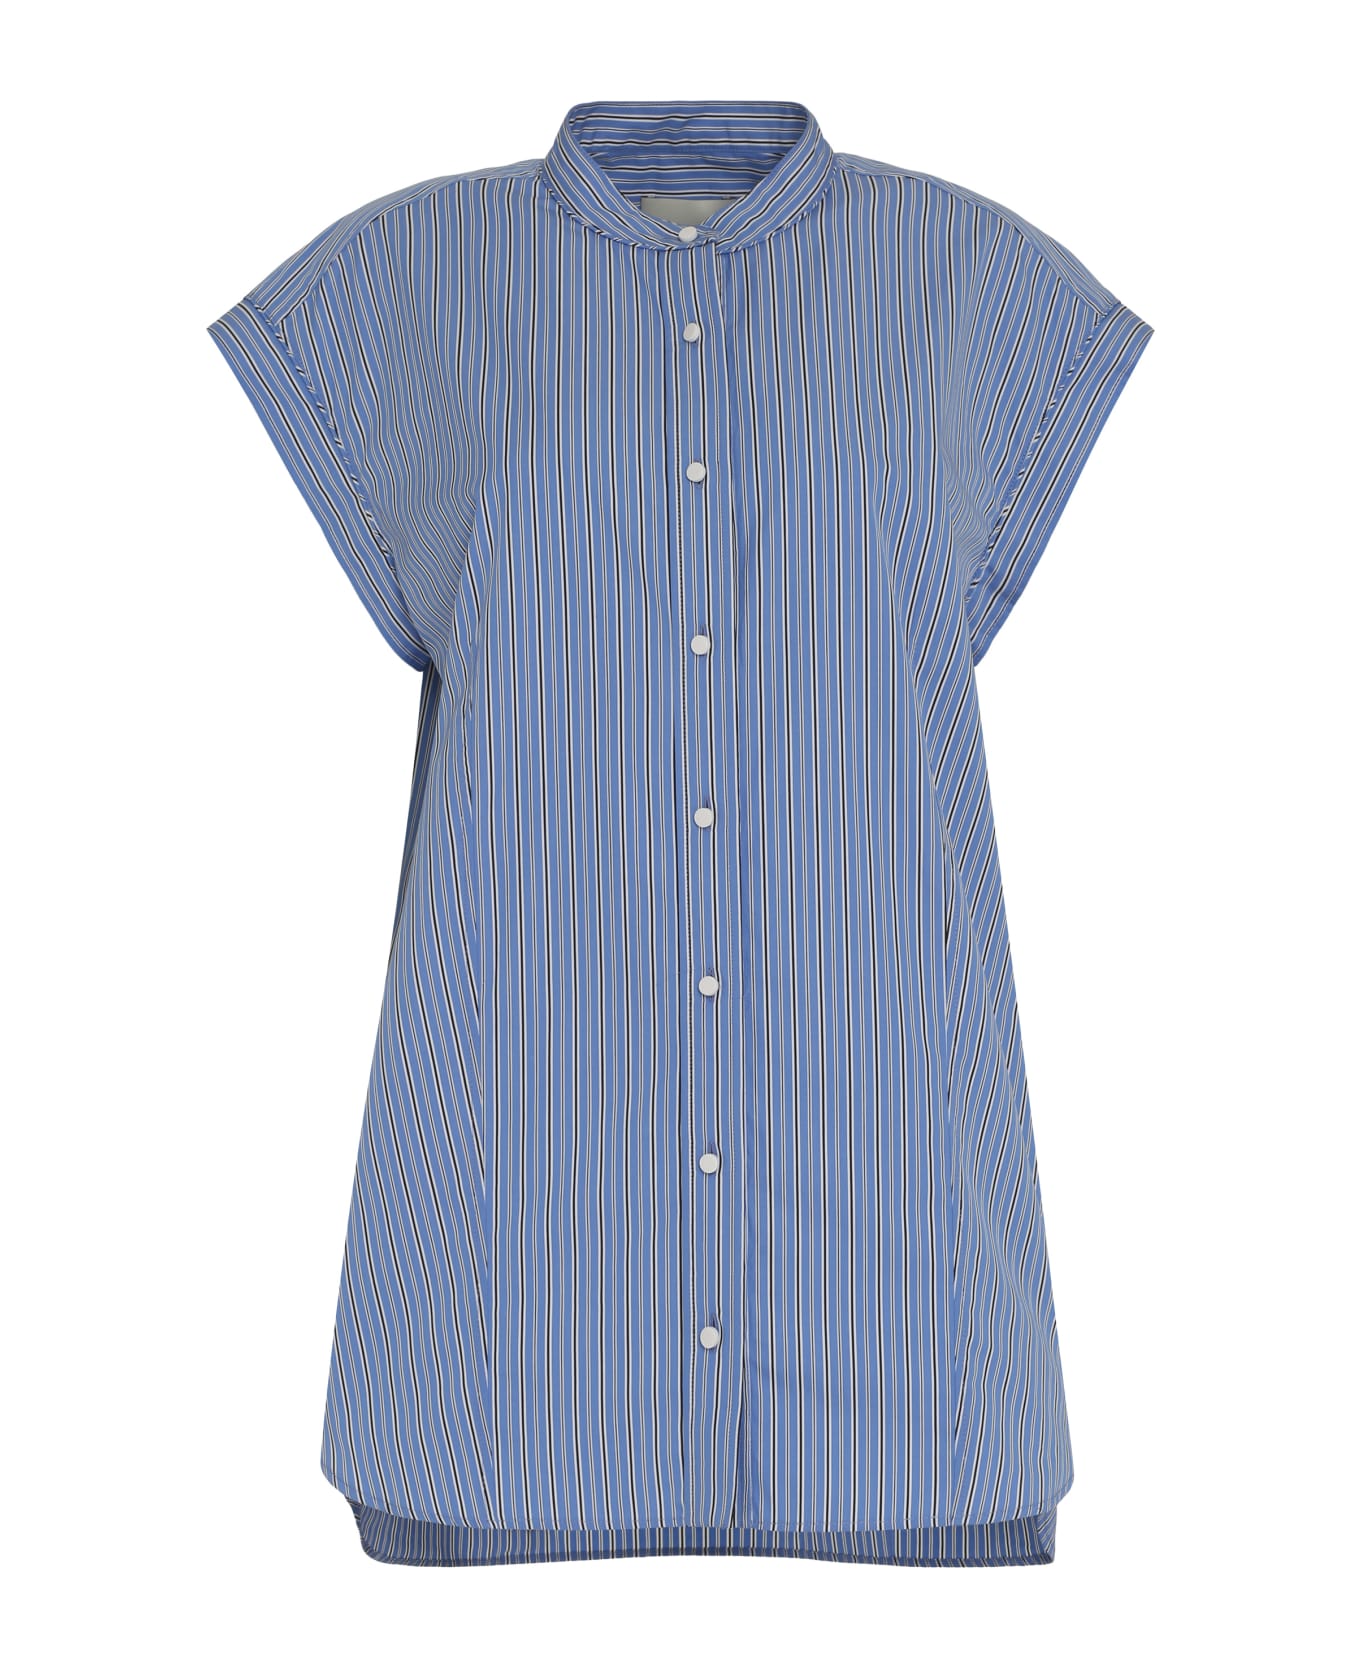 Isabel Marant Reggy Striped Cotton Shirt - Light Blue